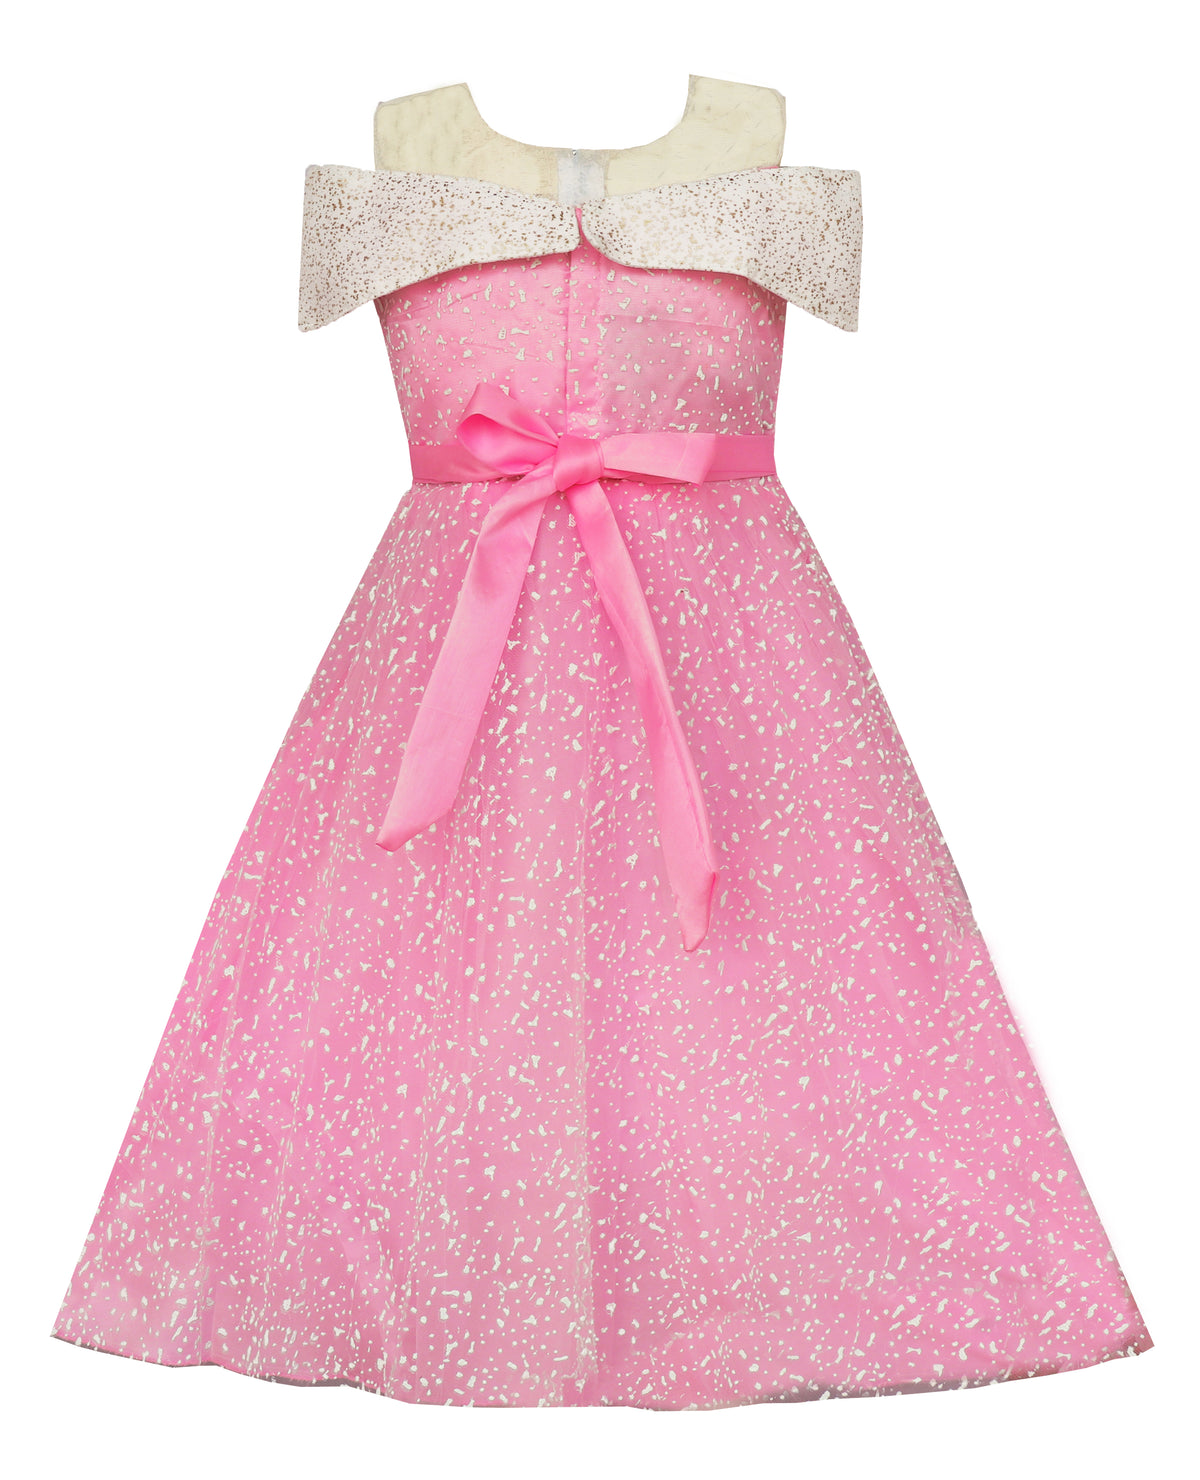 My Lil Princess Pink Polka Dress Back View